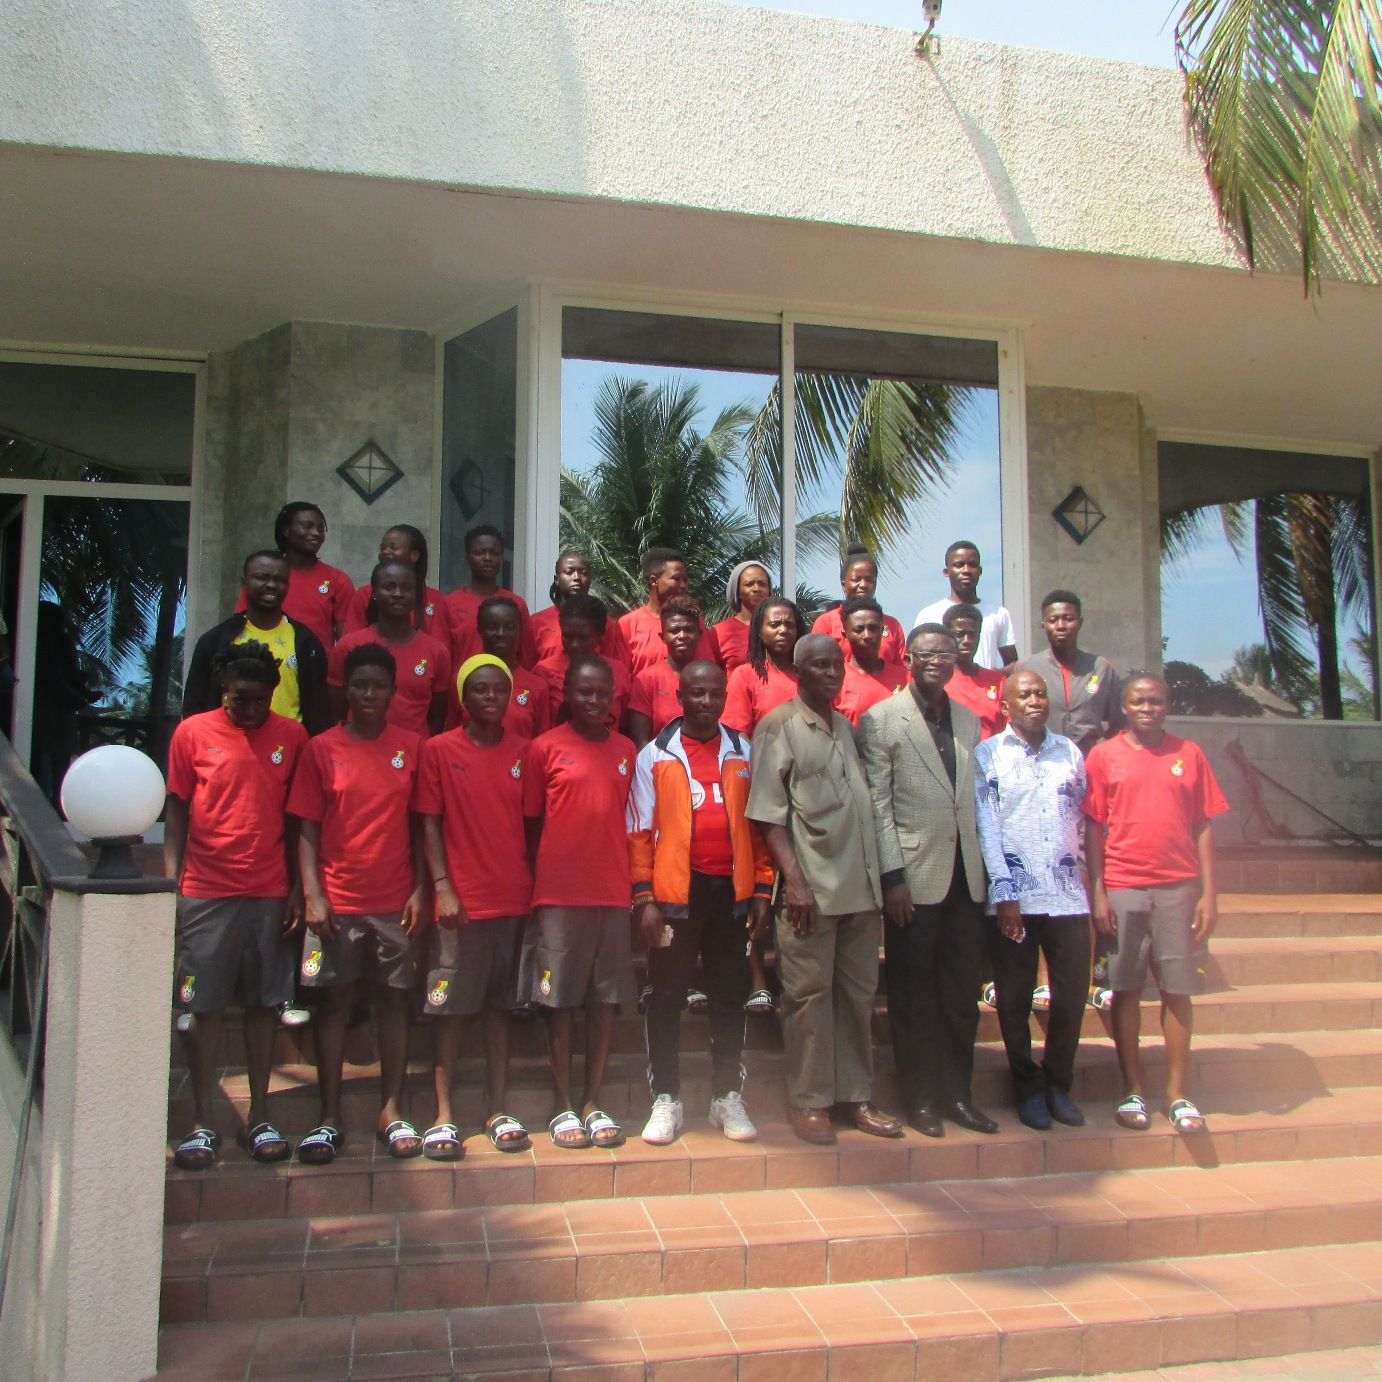 Meet the Ghana National Women's Soccer Team